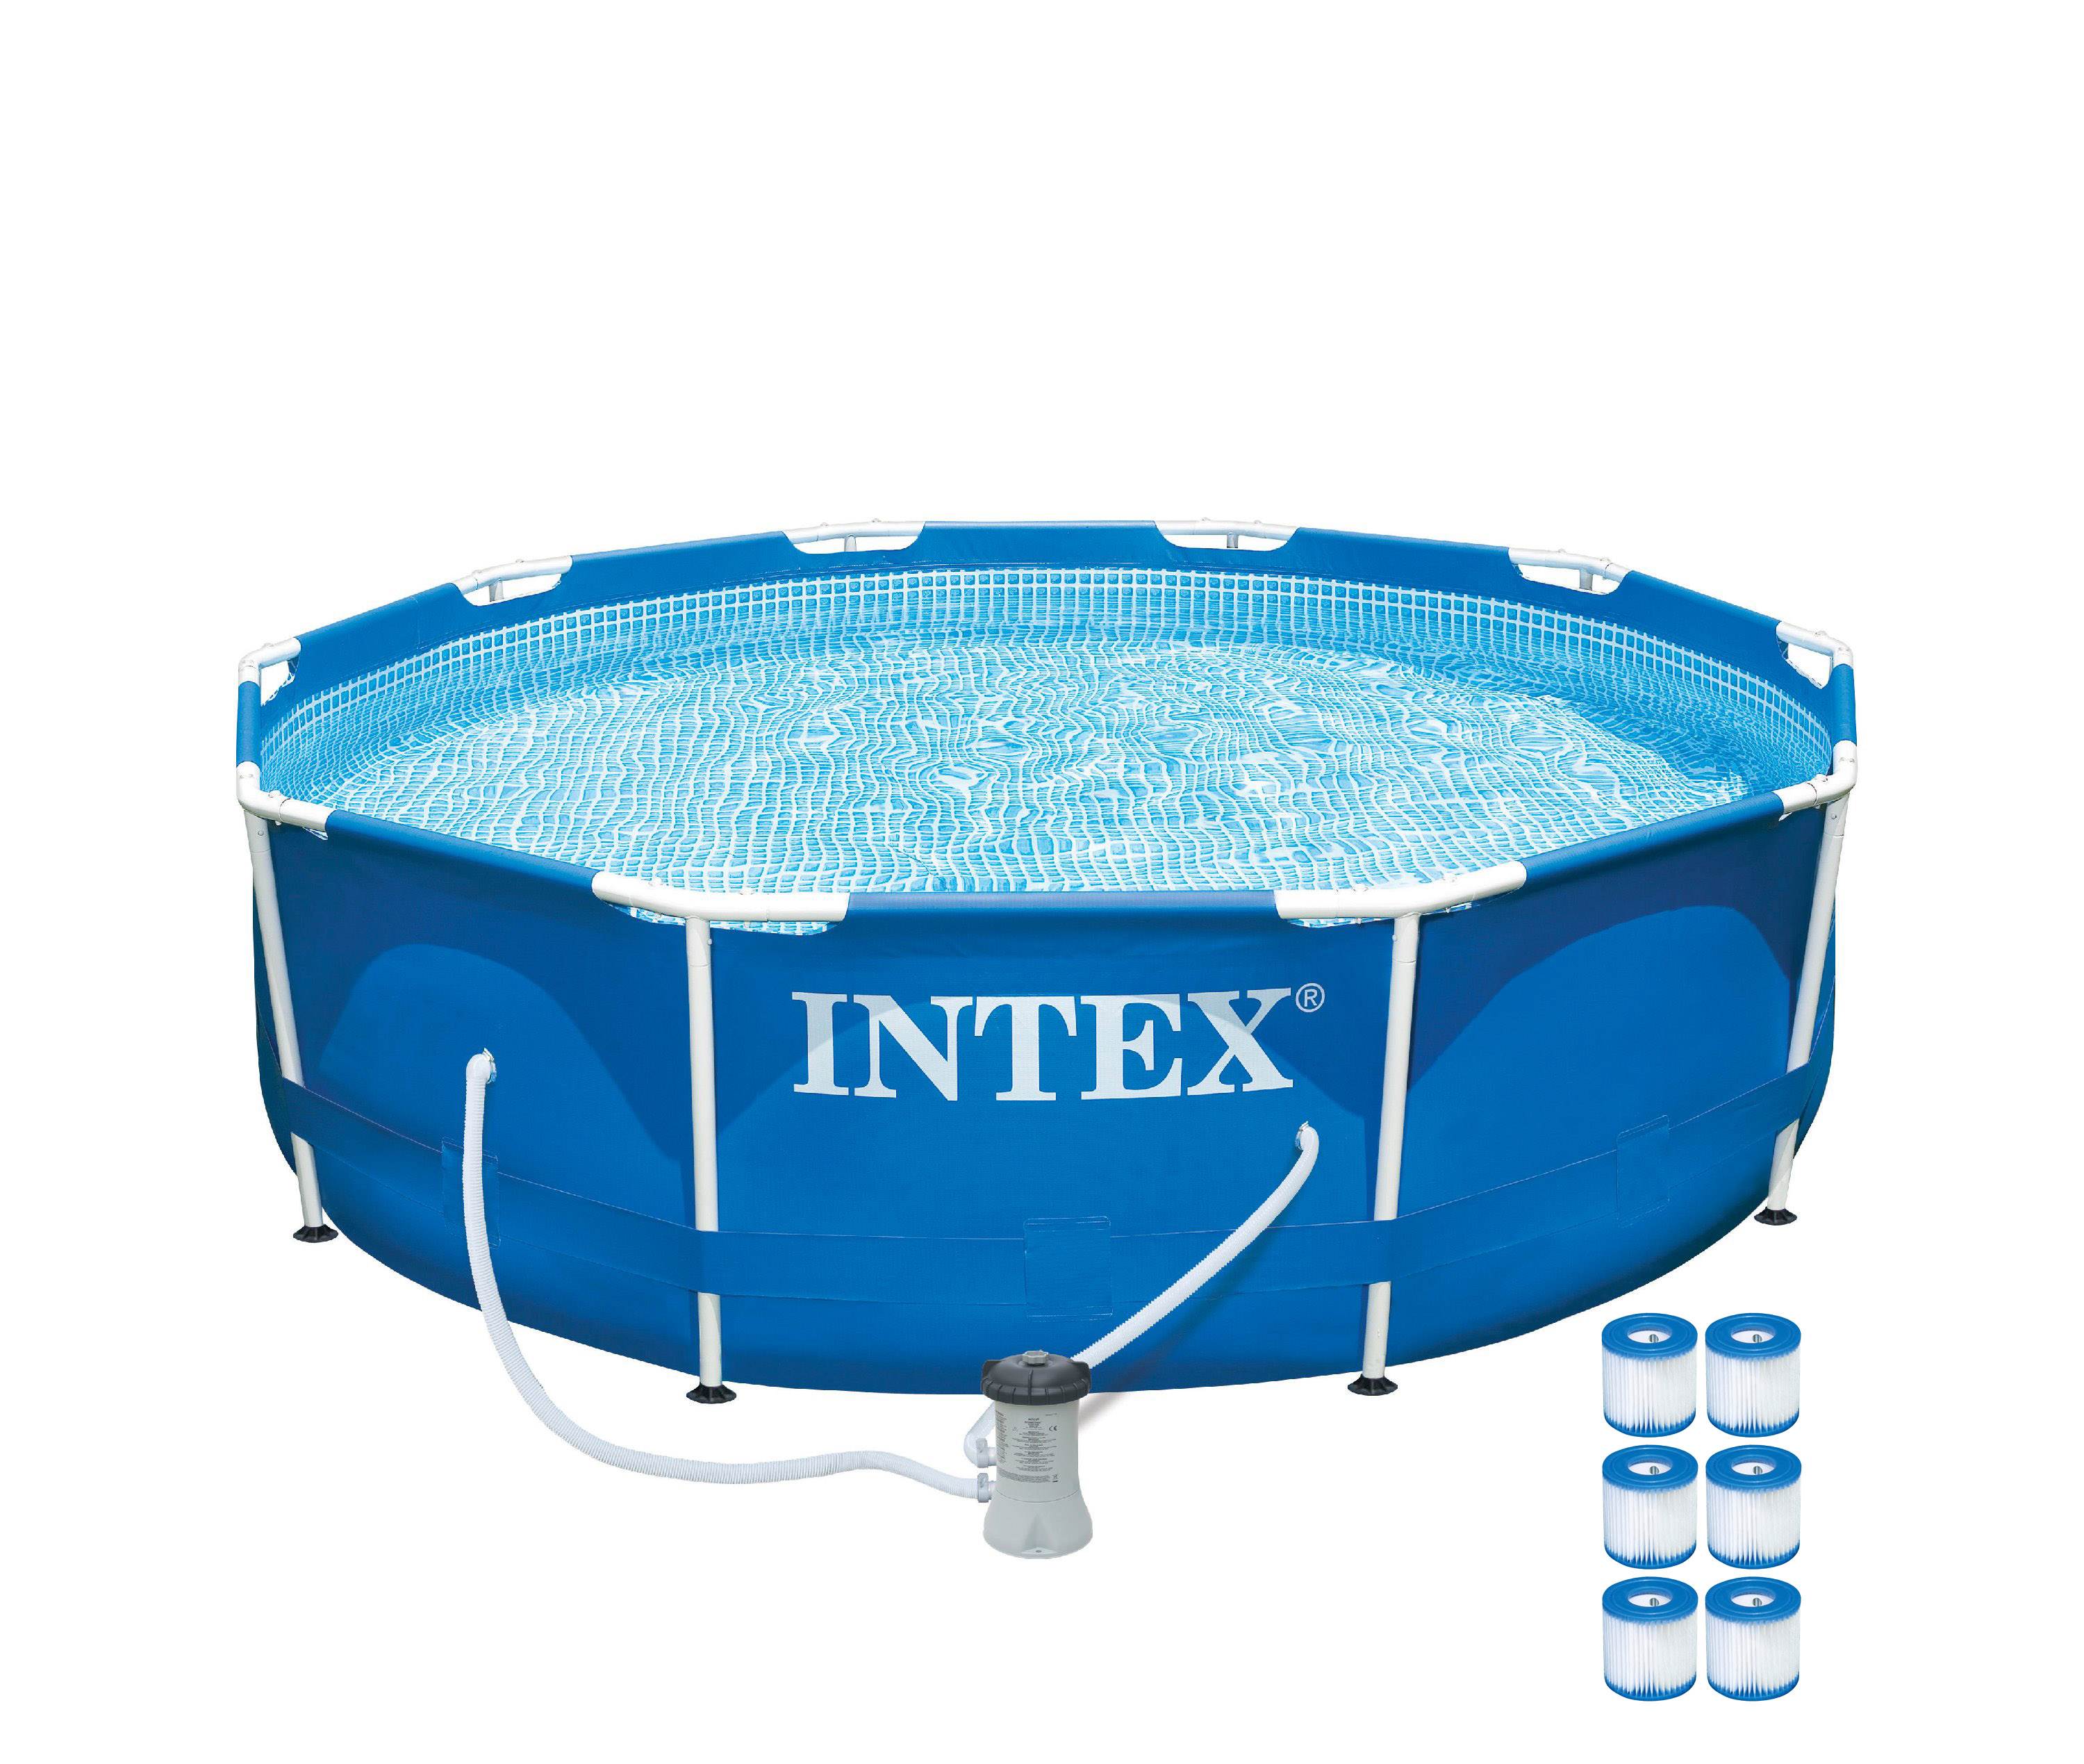 Intex Type H Filter Cartridge for Intex 330gph Pump 8-10ft pools AVOID FOAM!